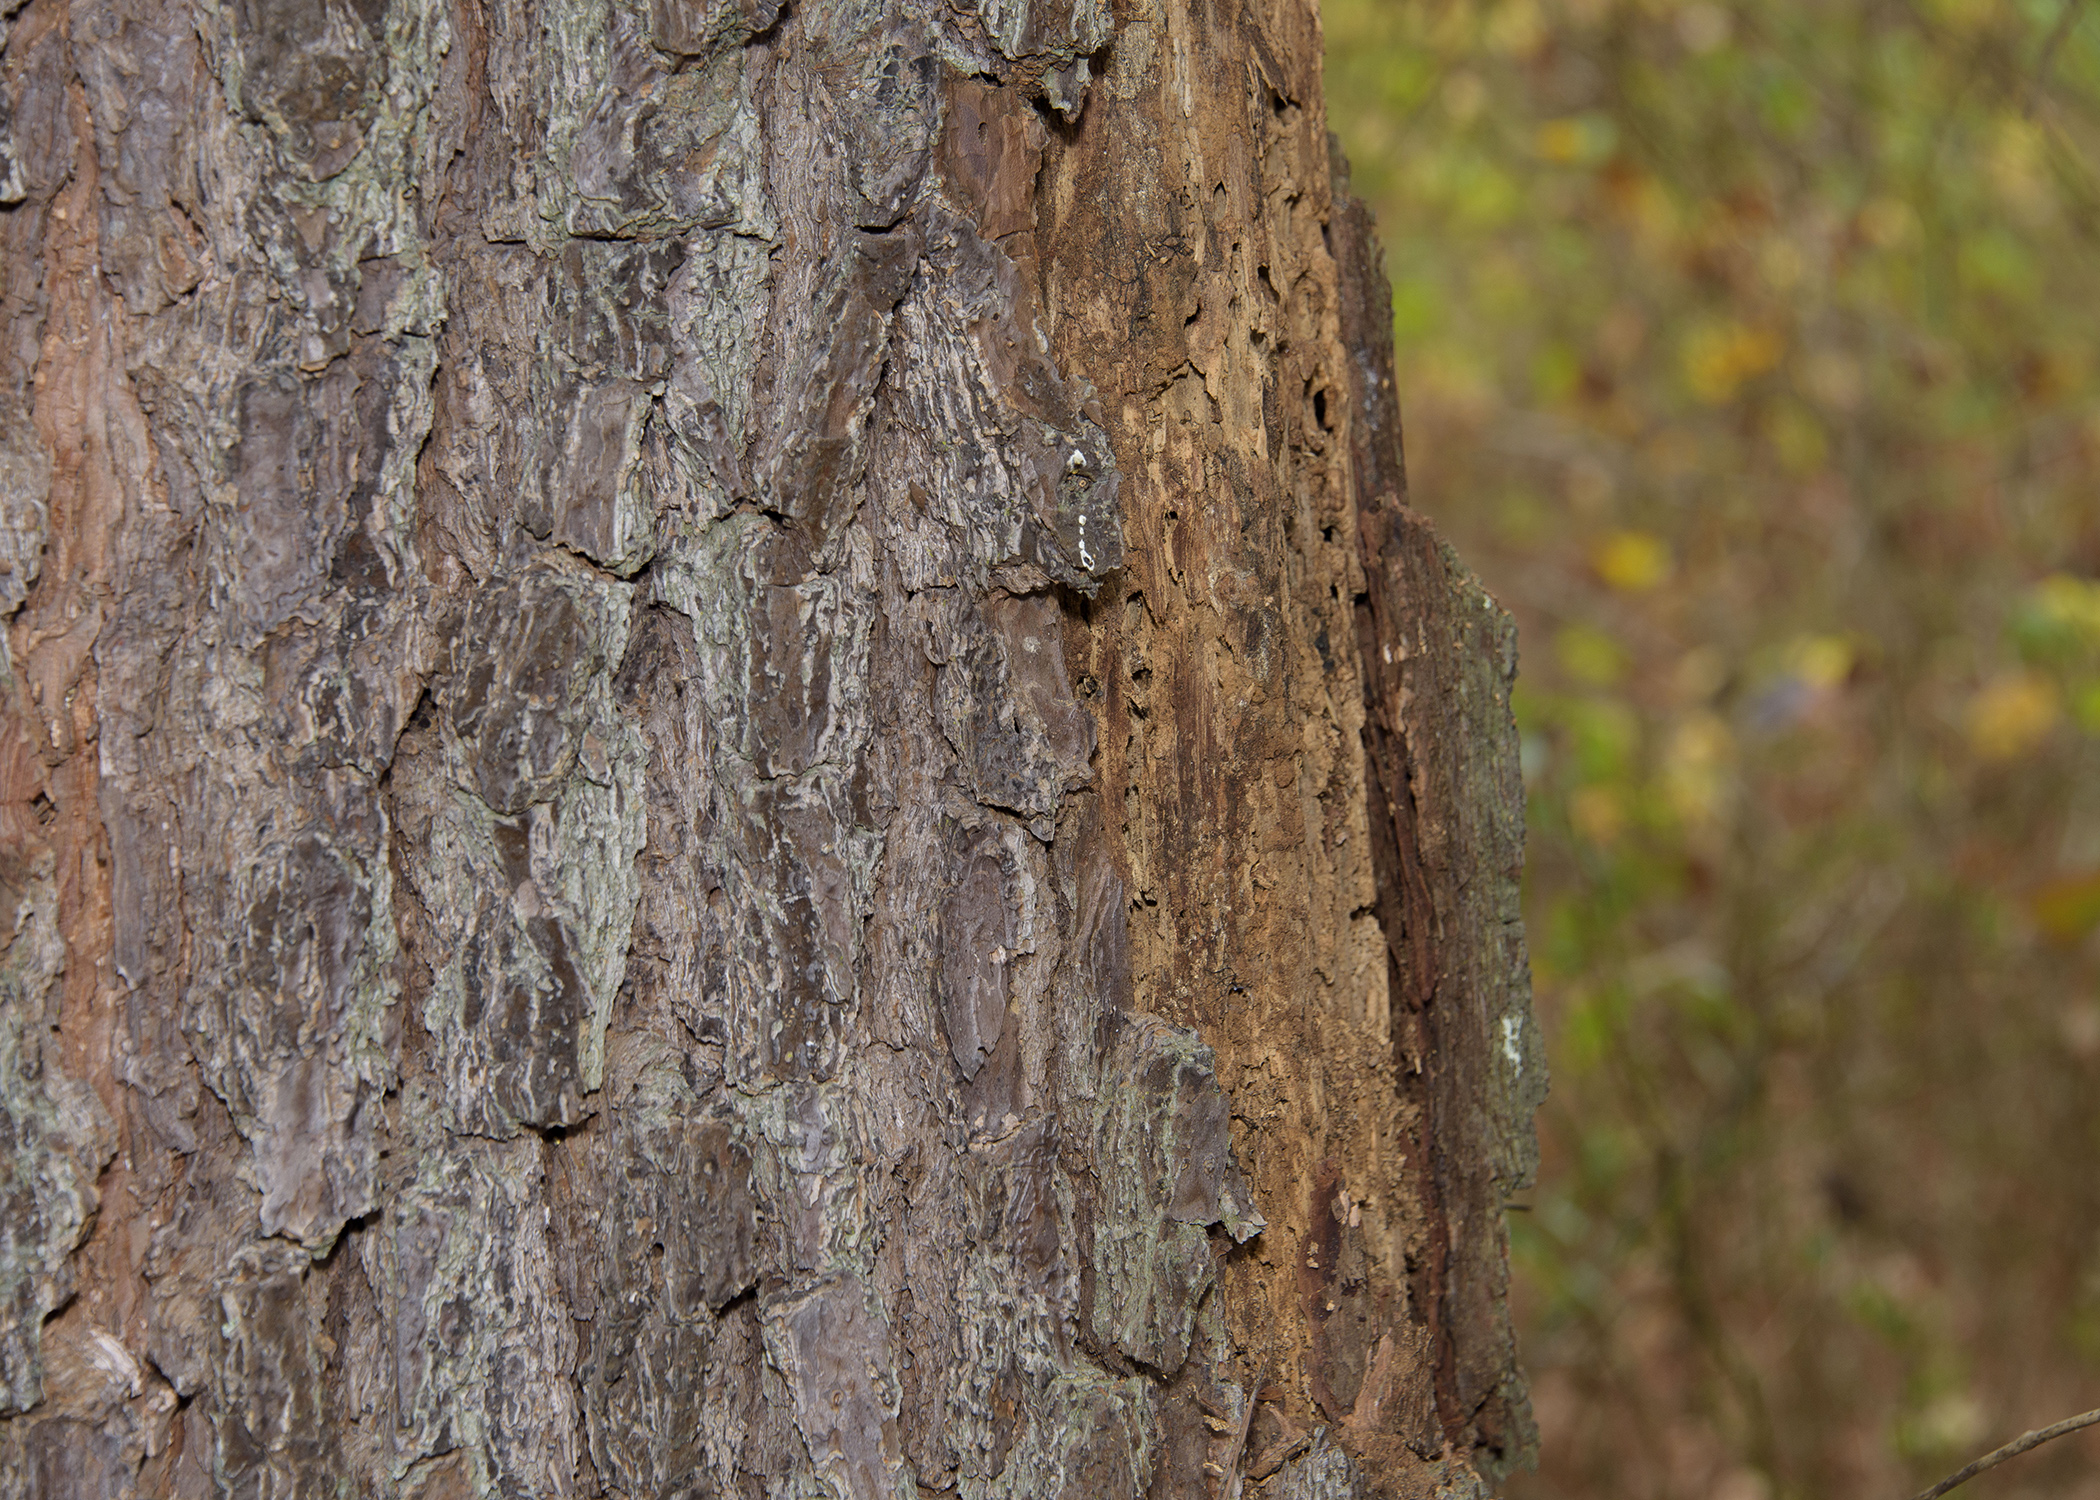 A close-up photo of a pine tree’s damaged bark